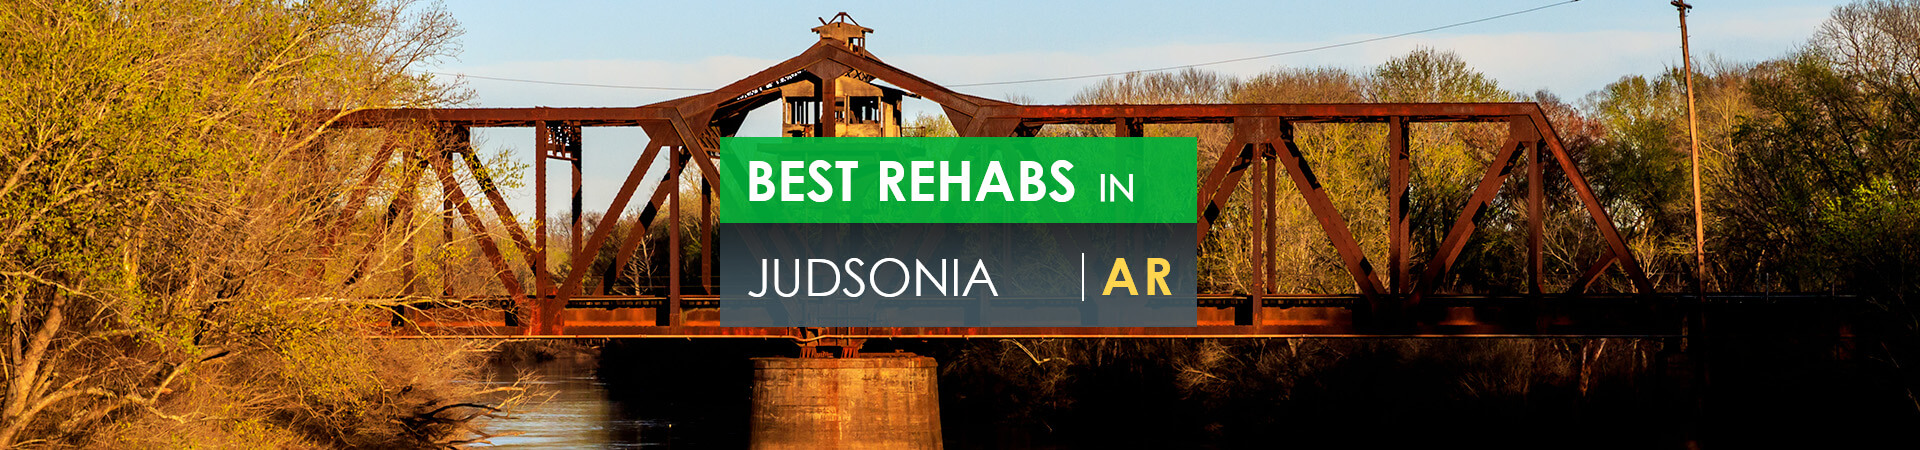 Best rehabs in Judsonia, AR